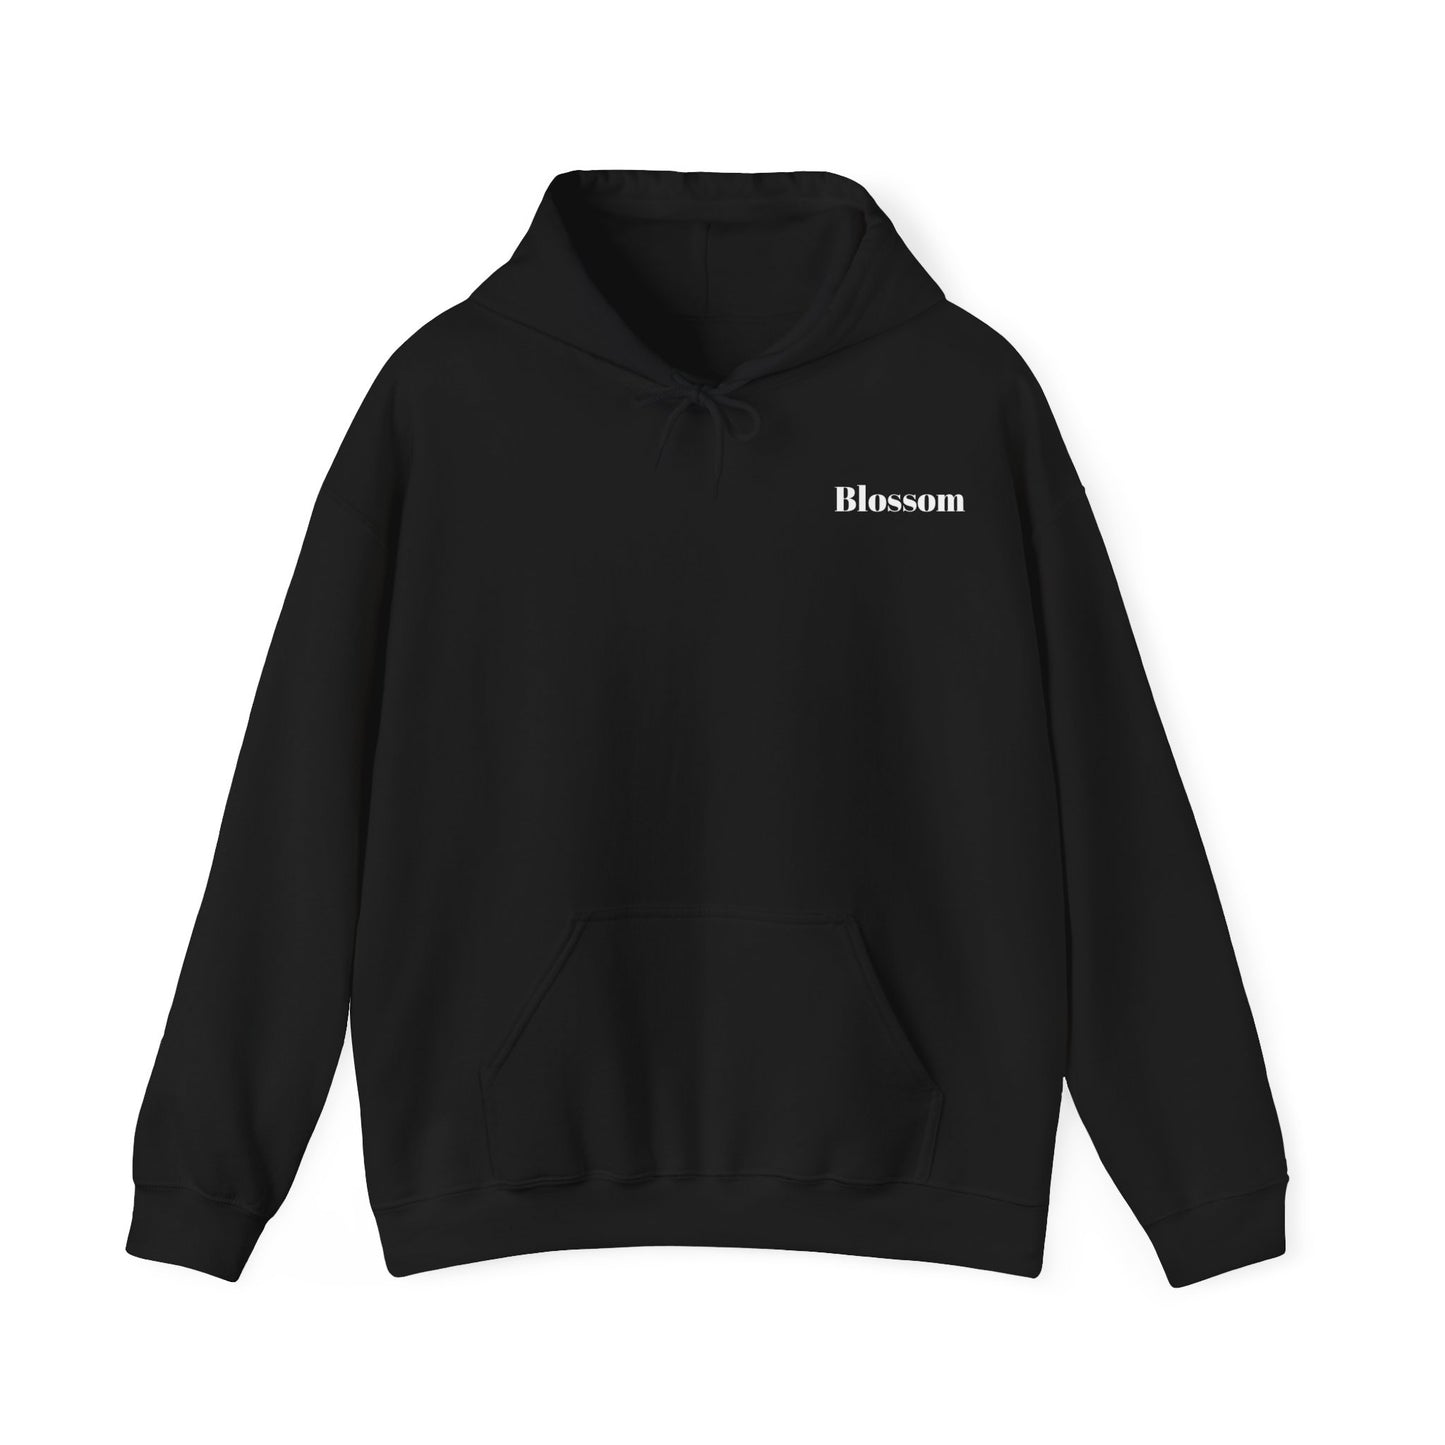 Blossom Unisex Hooded Sweatshirt with Heavy Blend Fabric15